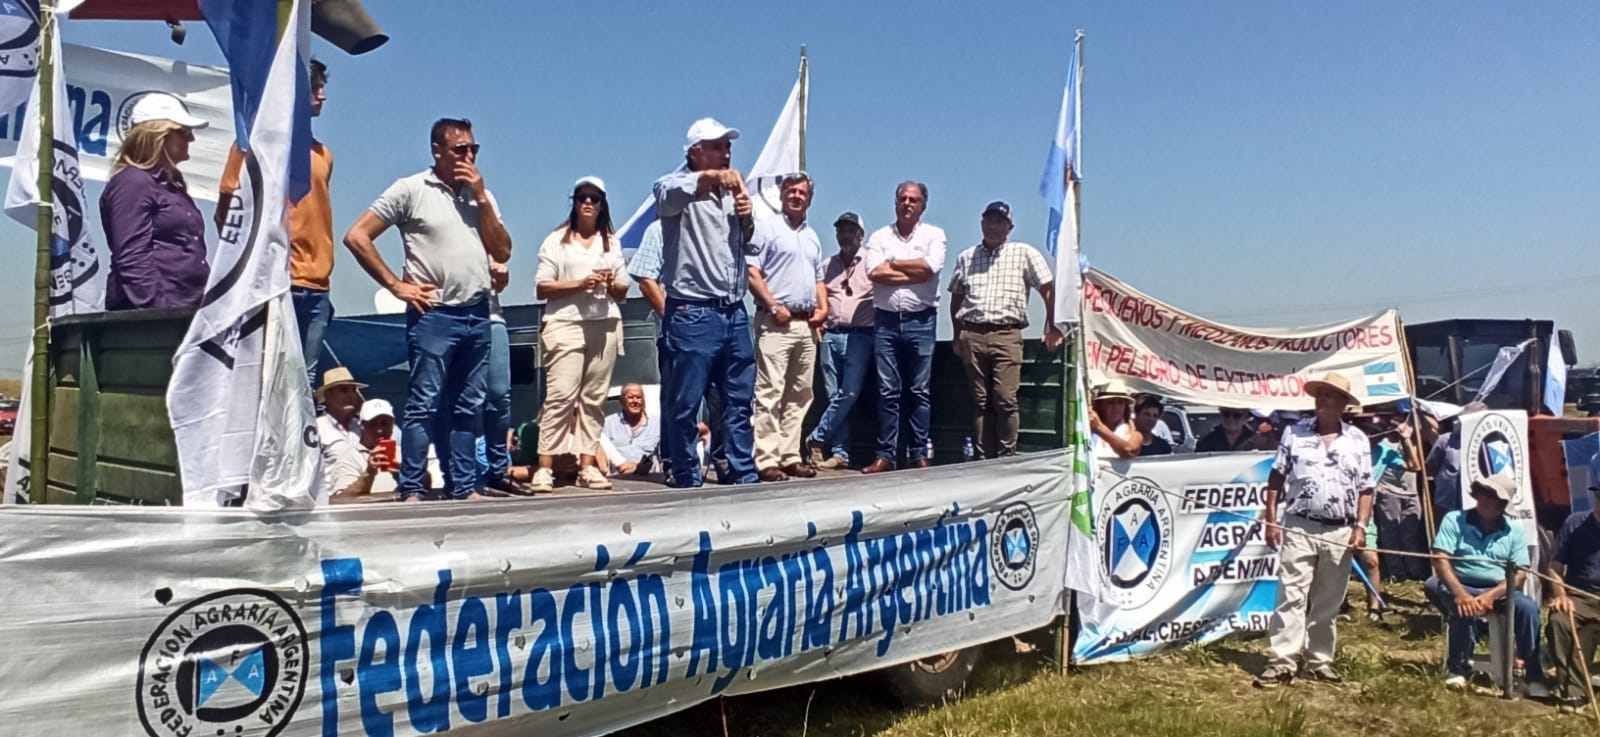 Mañana en Buenos Aires Federación Agraria reclama medidas urgentes